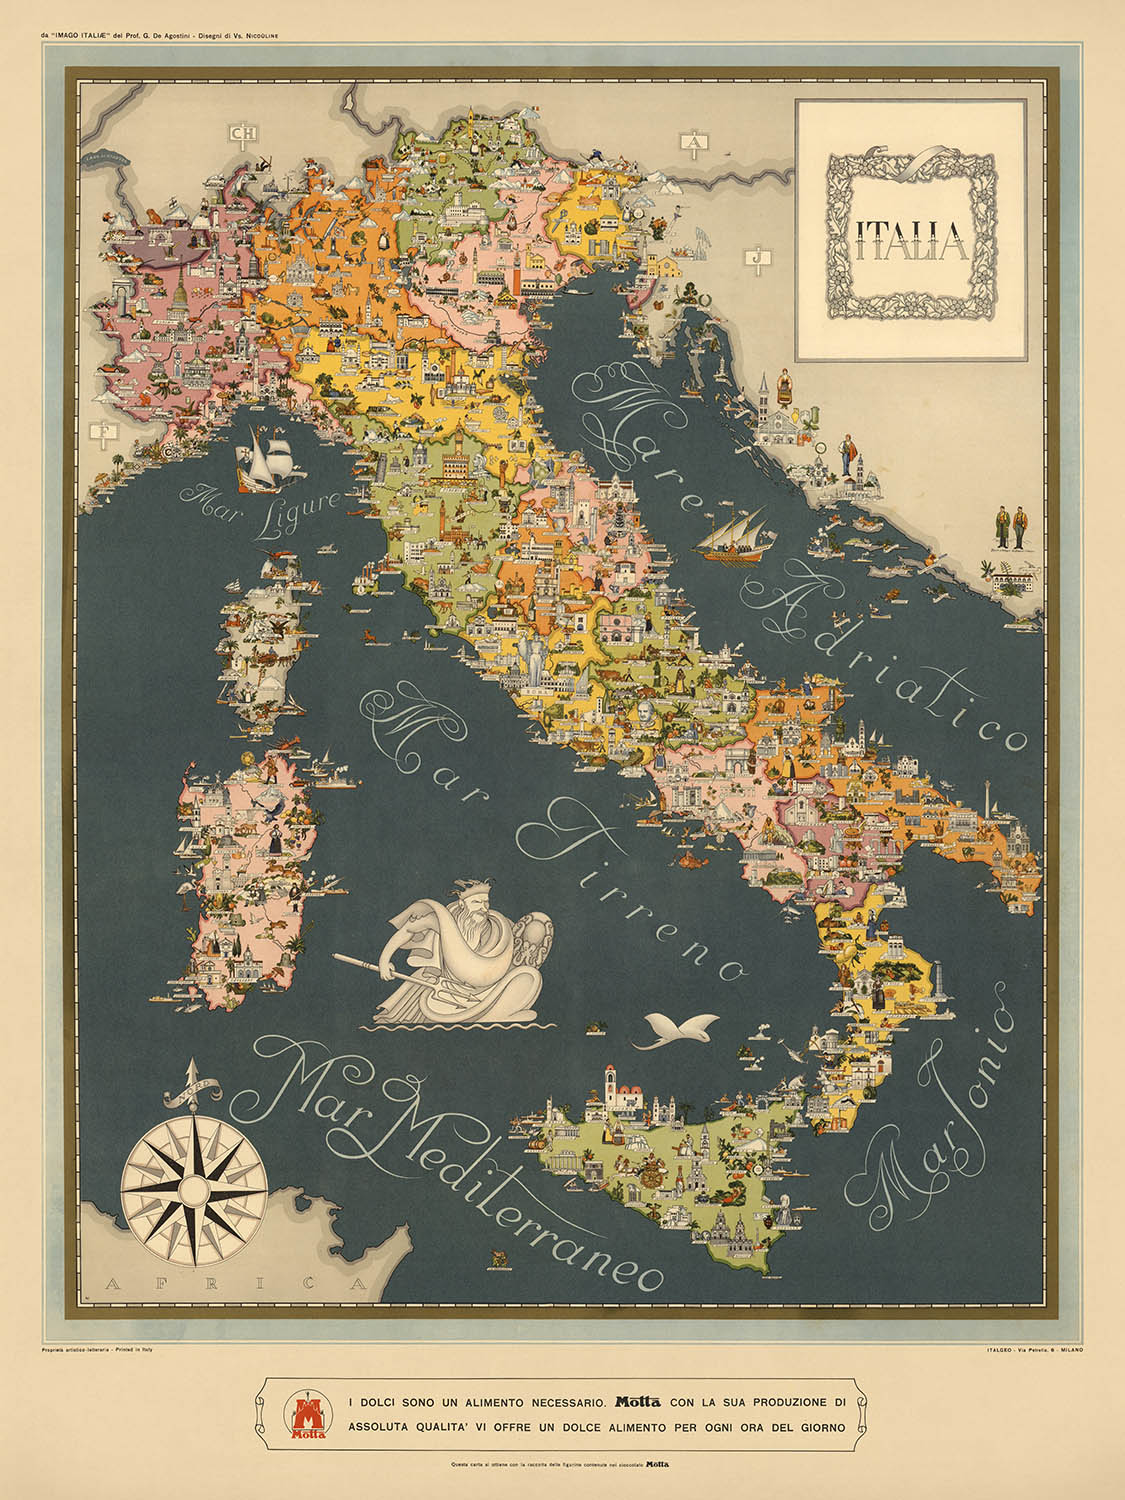 Old Pictorial Map of Italy by De Agostini, 1938: Rome, Milan, Venice, Alps, Regions, Sicily, Sardinia, etc